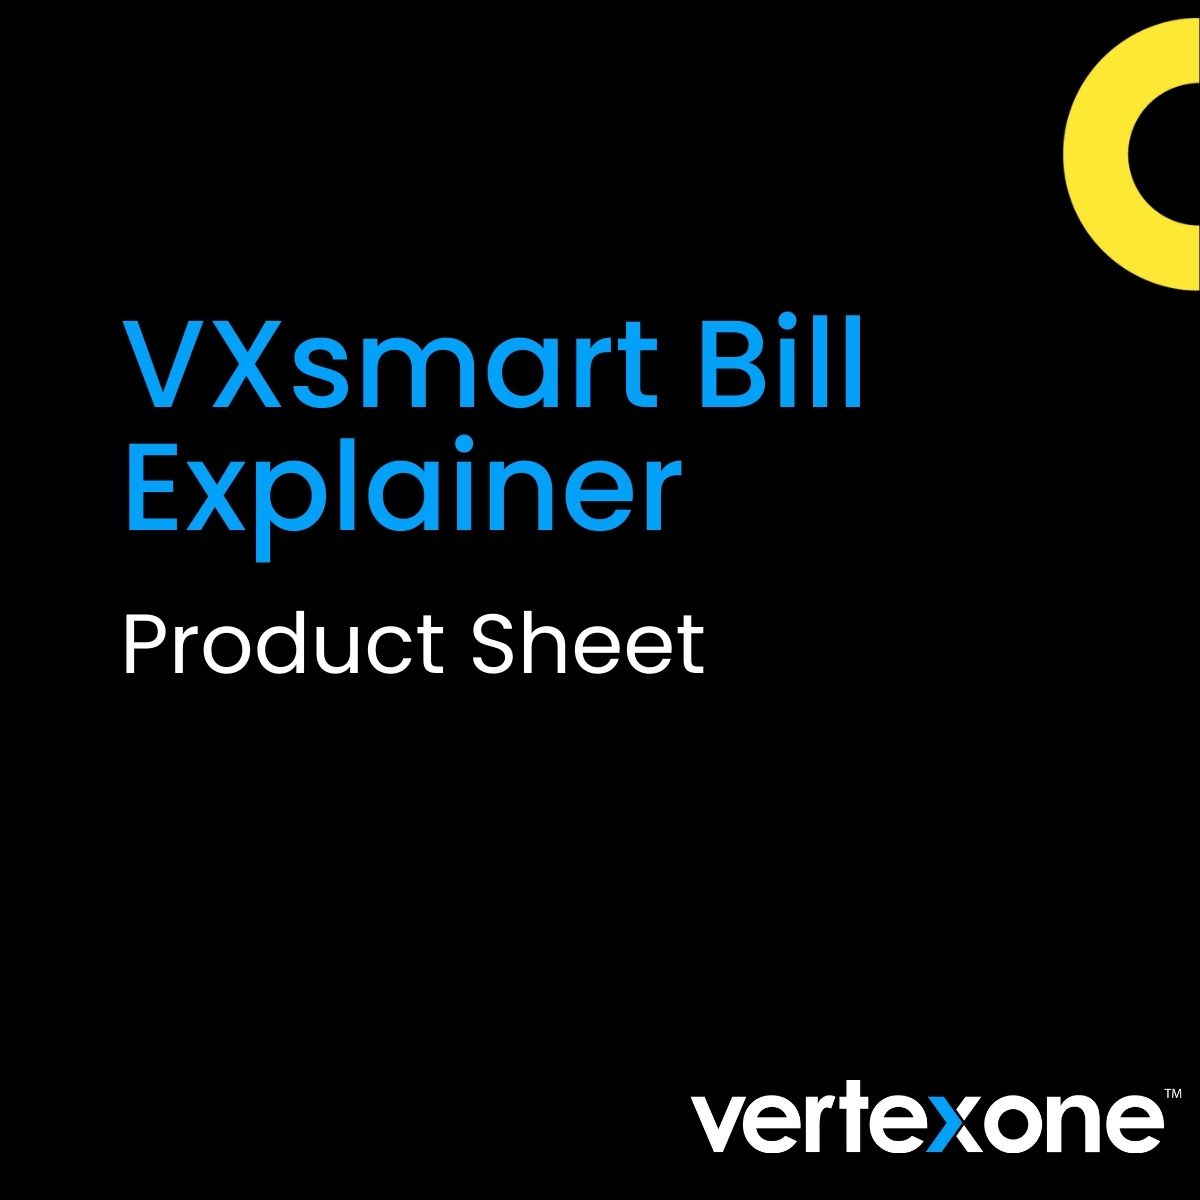 VXsmart Bill Explainer Product Sheet